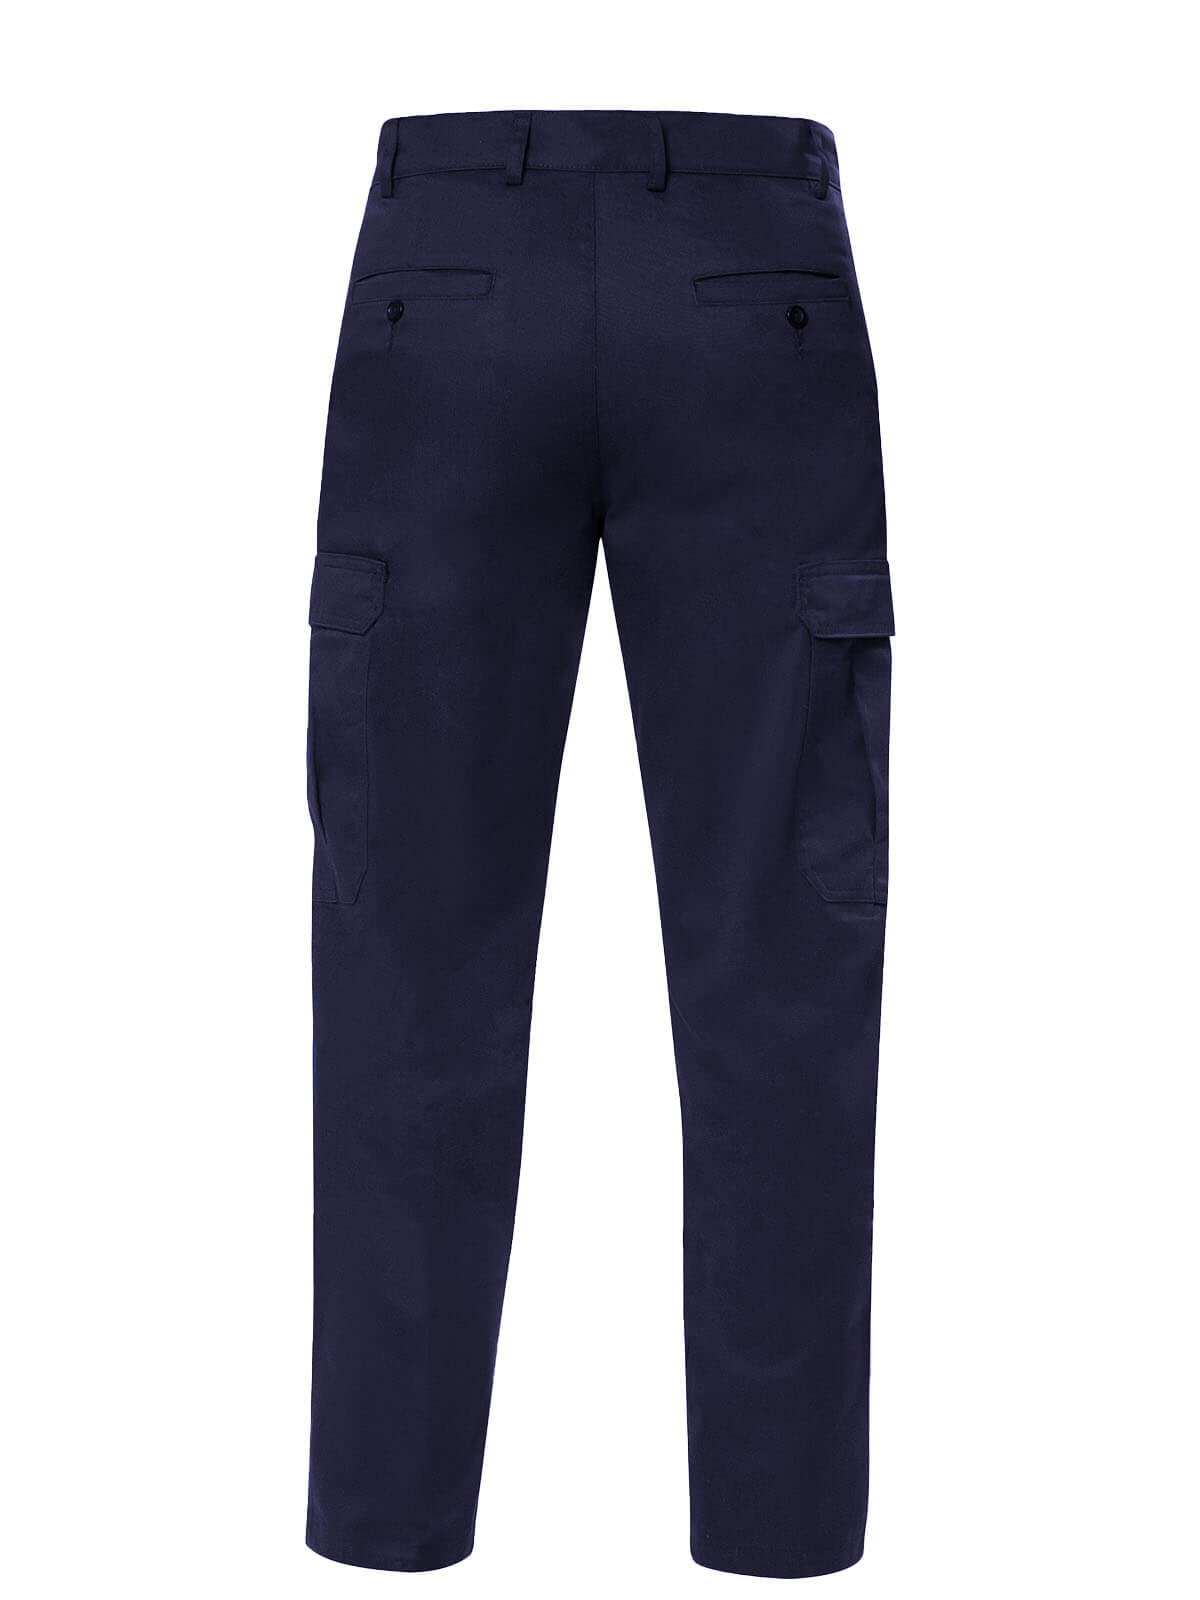 Pantalones tipo Cargo color azul